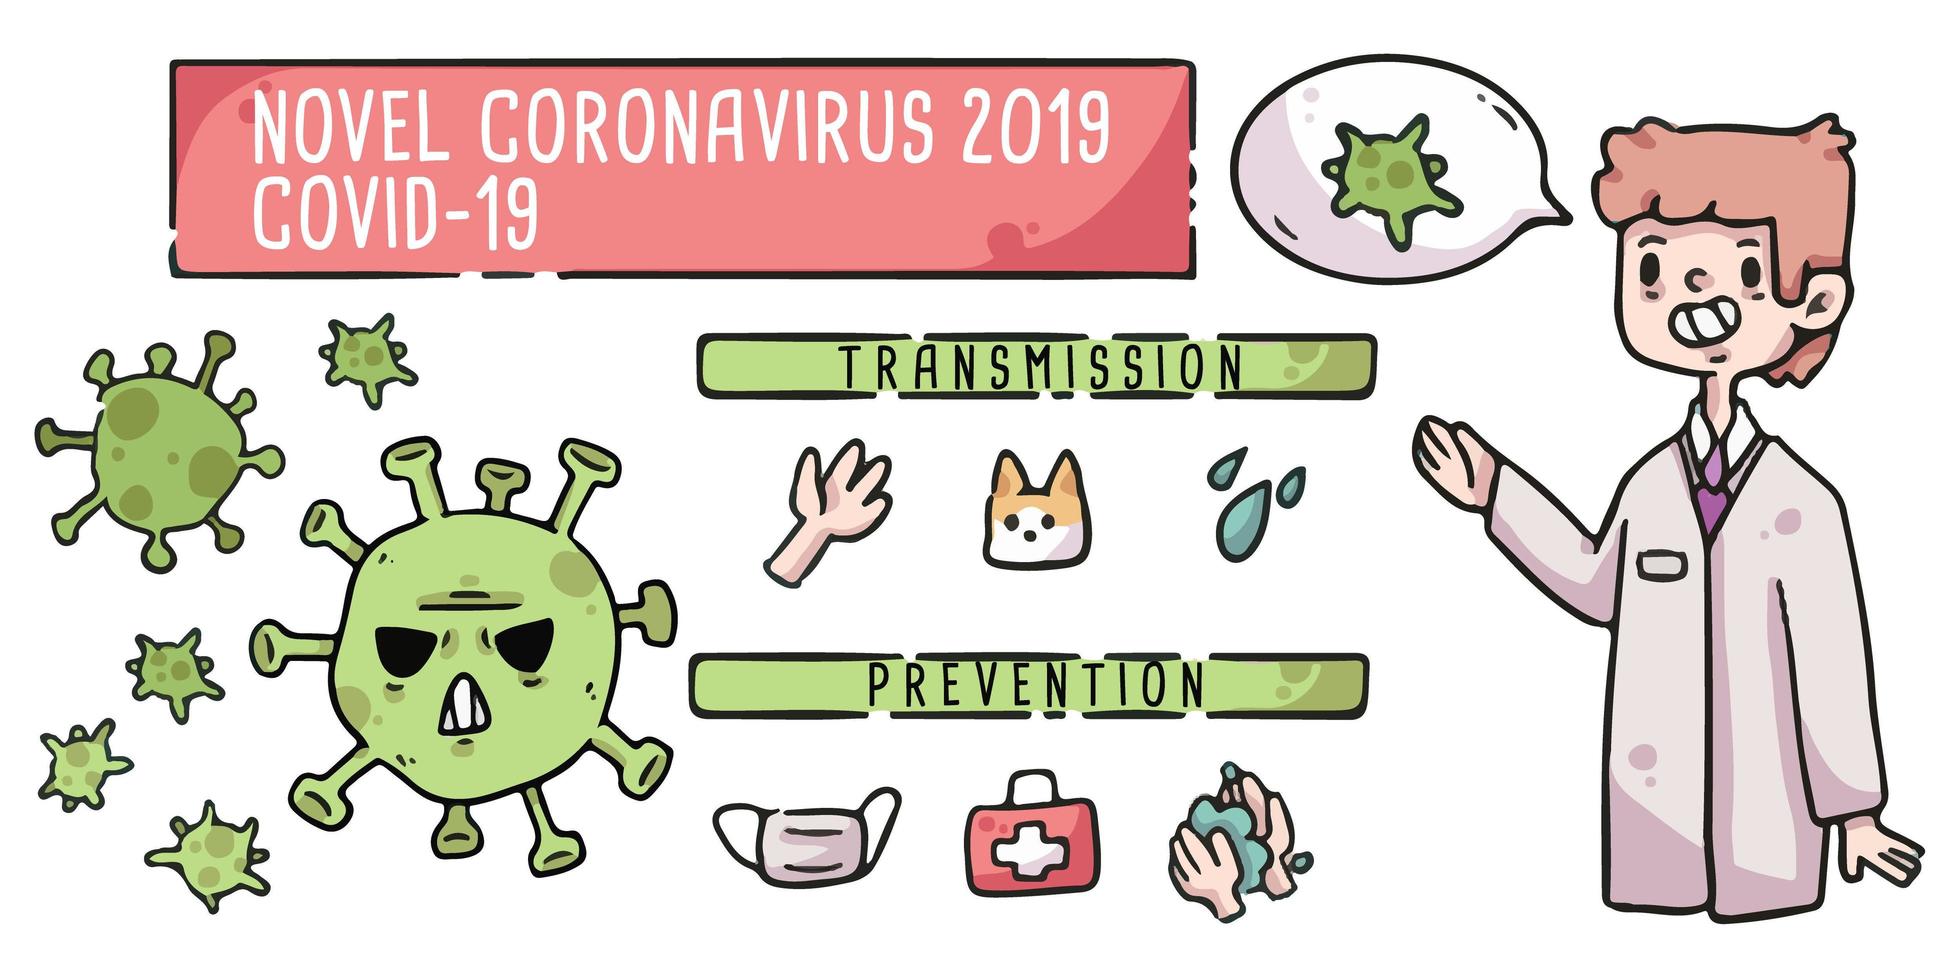 Coronavirus doctor educational illustration transmission and prevention of covid-19 vector